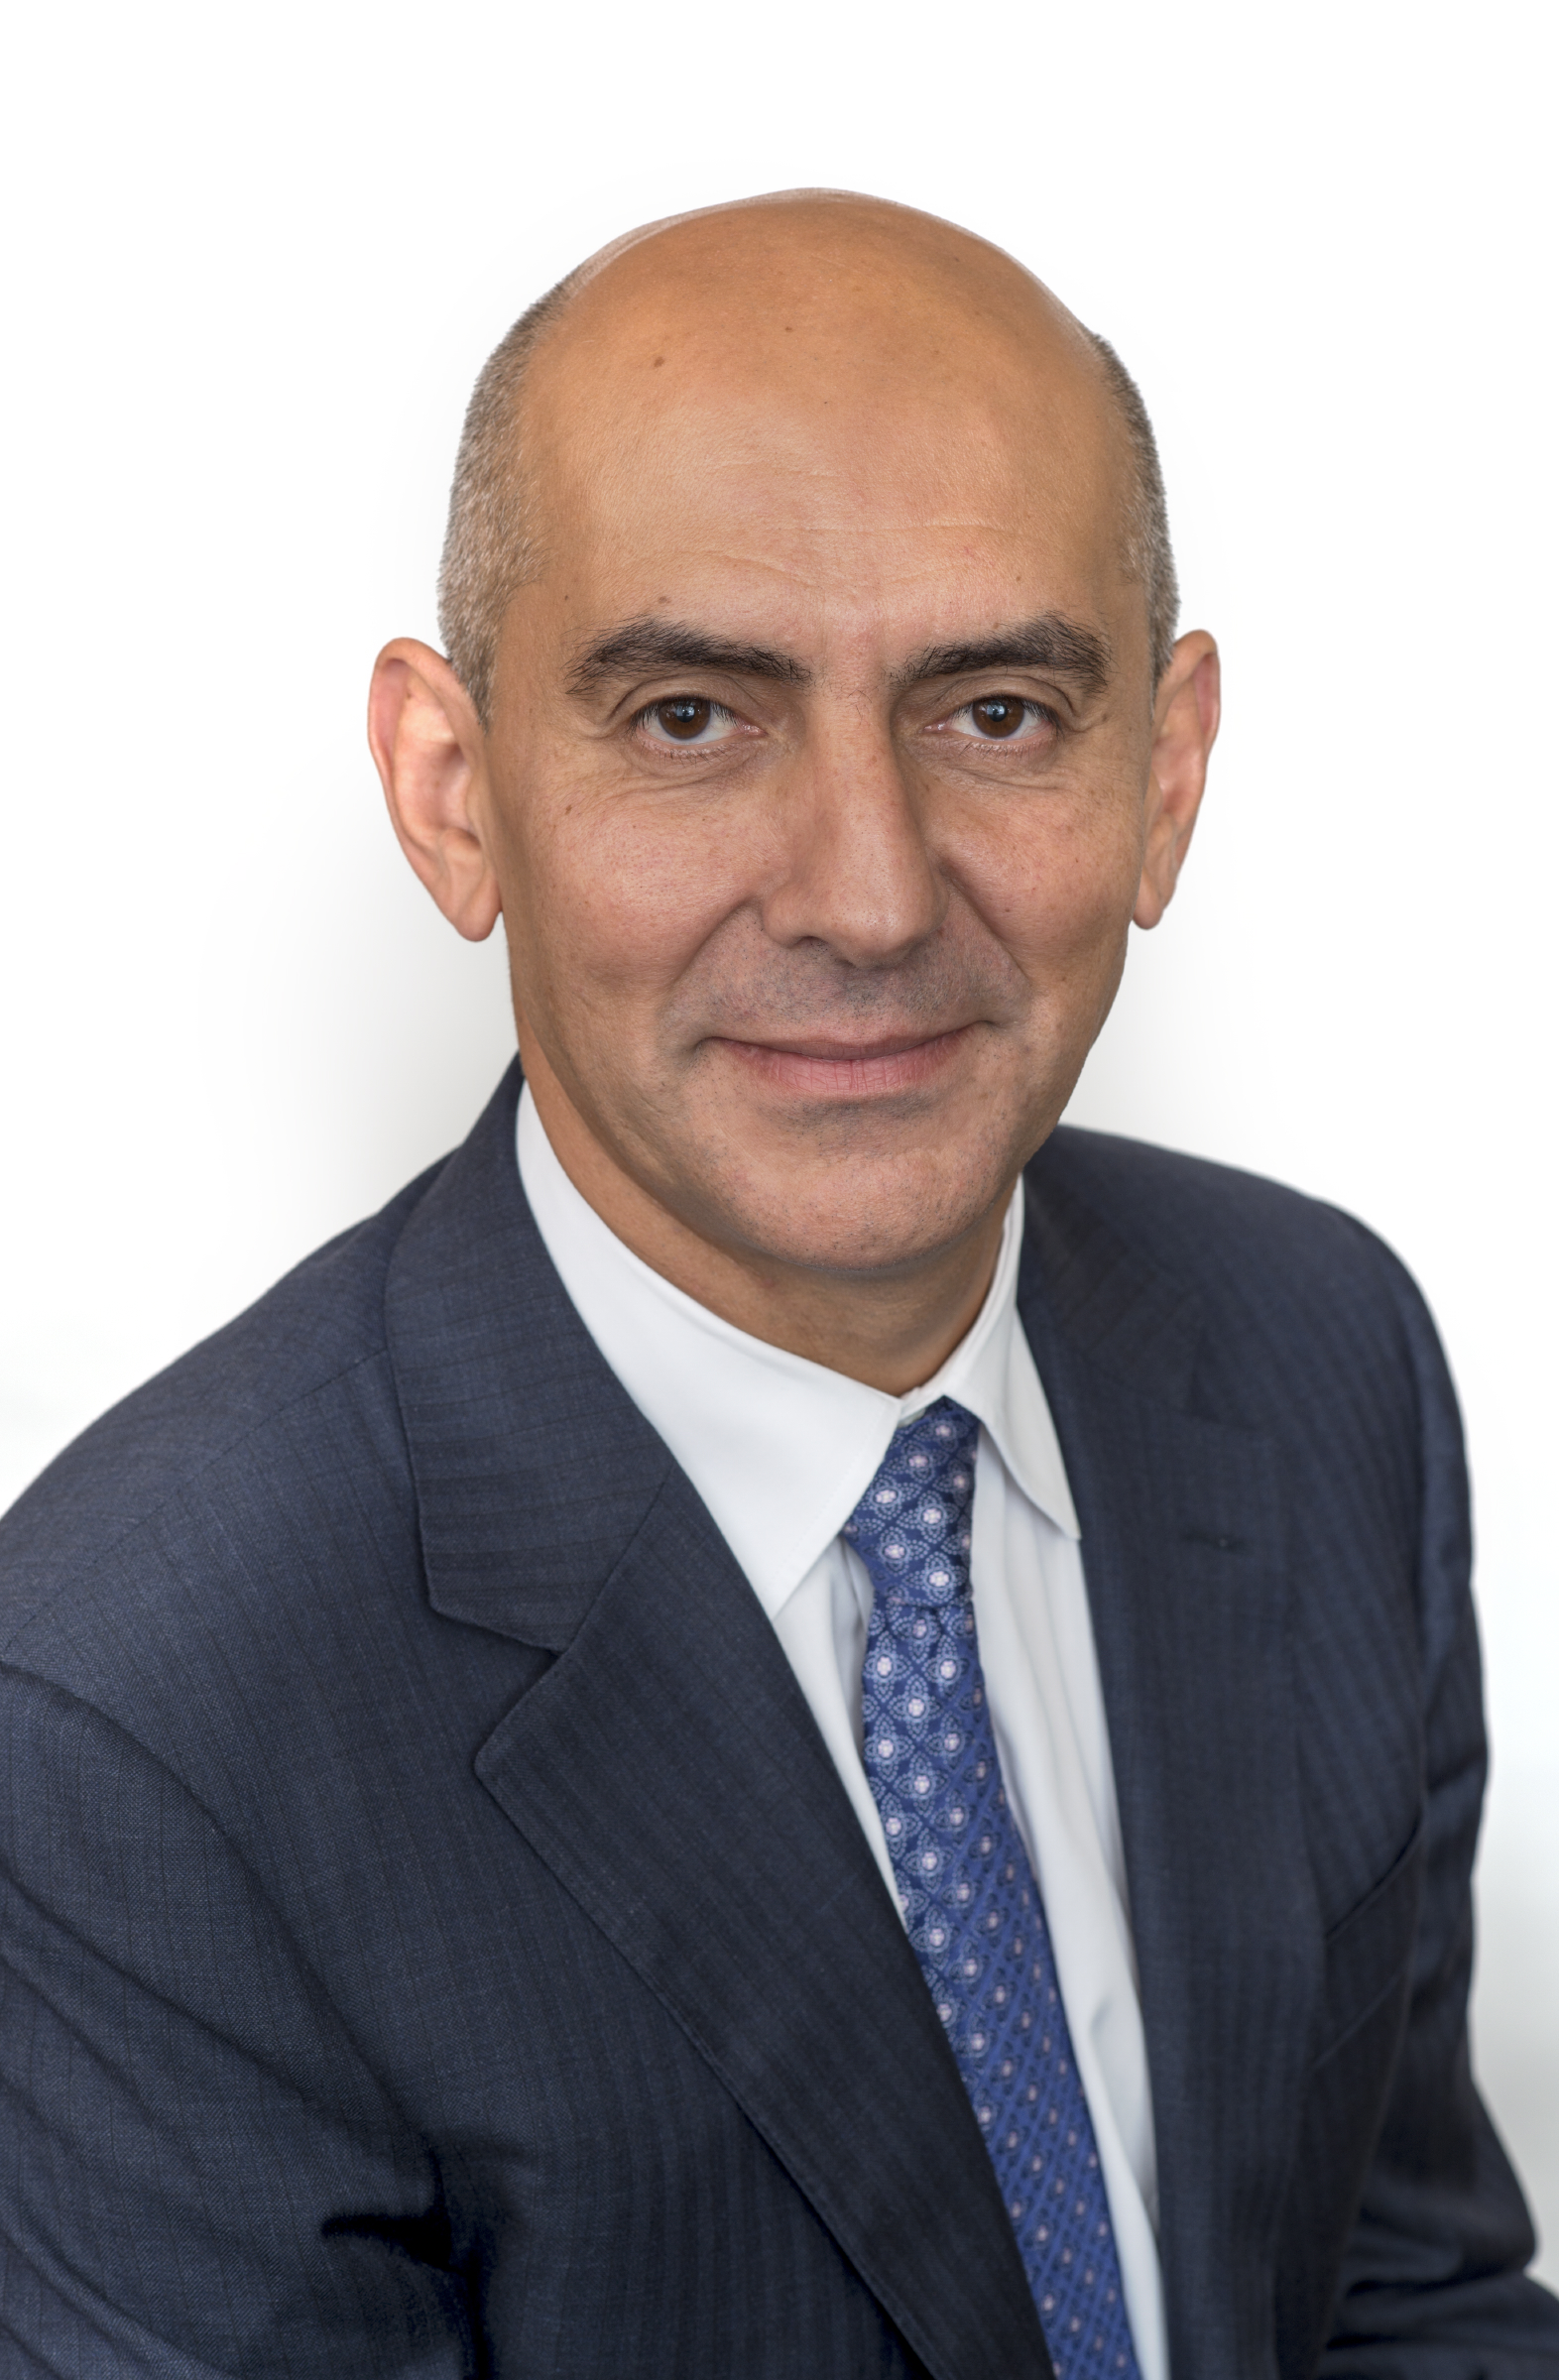 Pedro Antunes, Conference Board of Canada